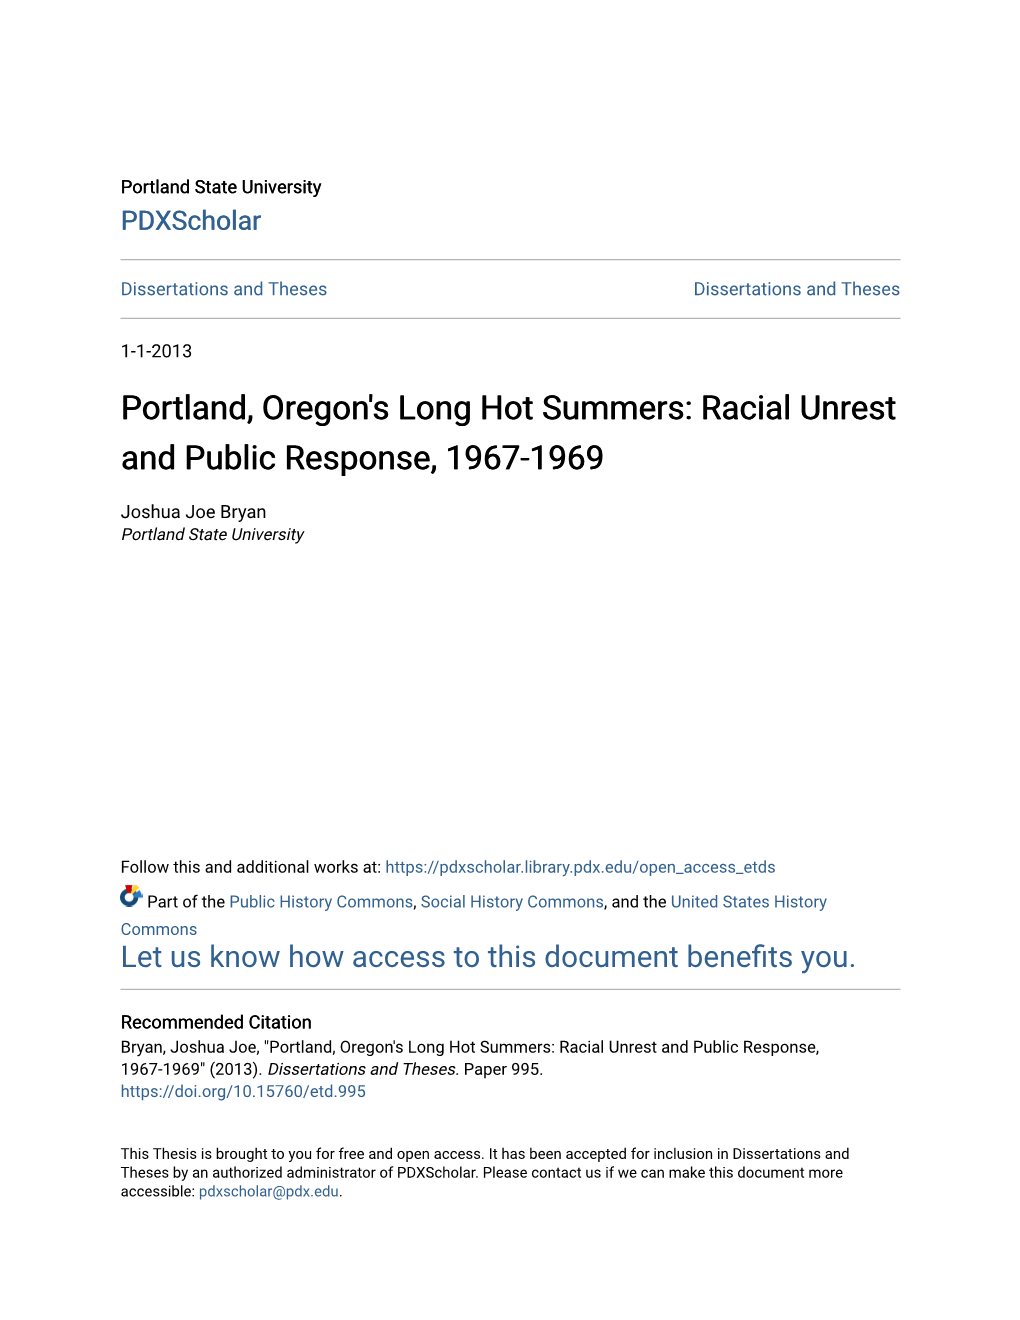 Portland, Oregon's Long Hot Summers: Racial Unrest and Public Response, 1967-1969